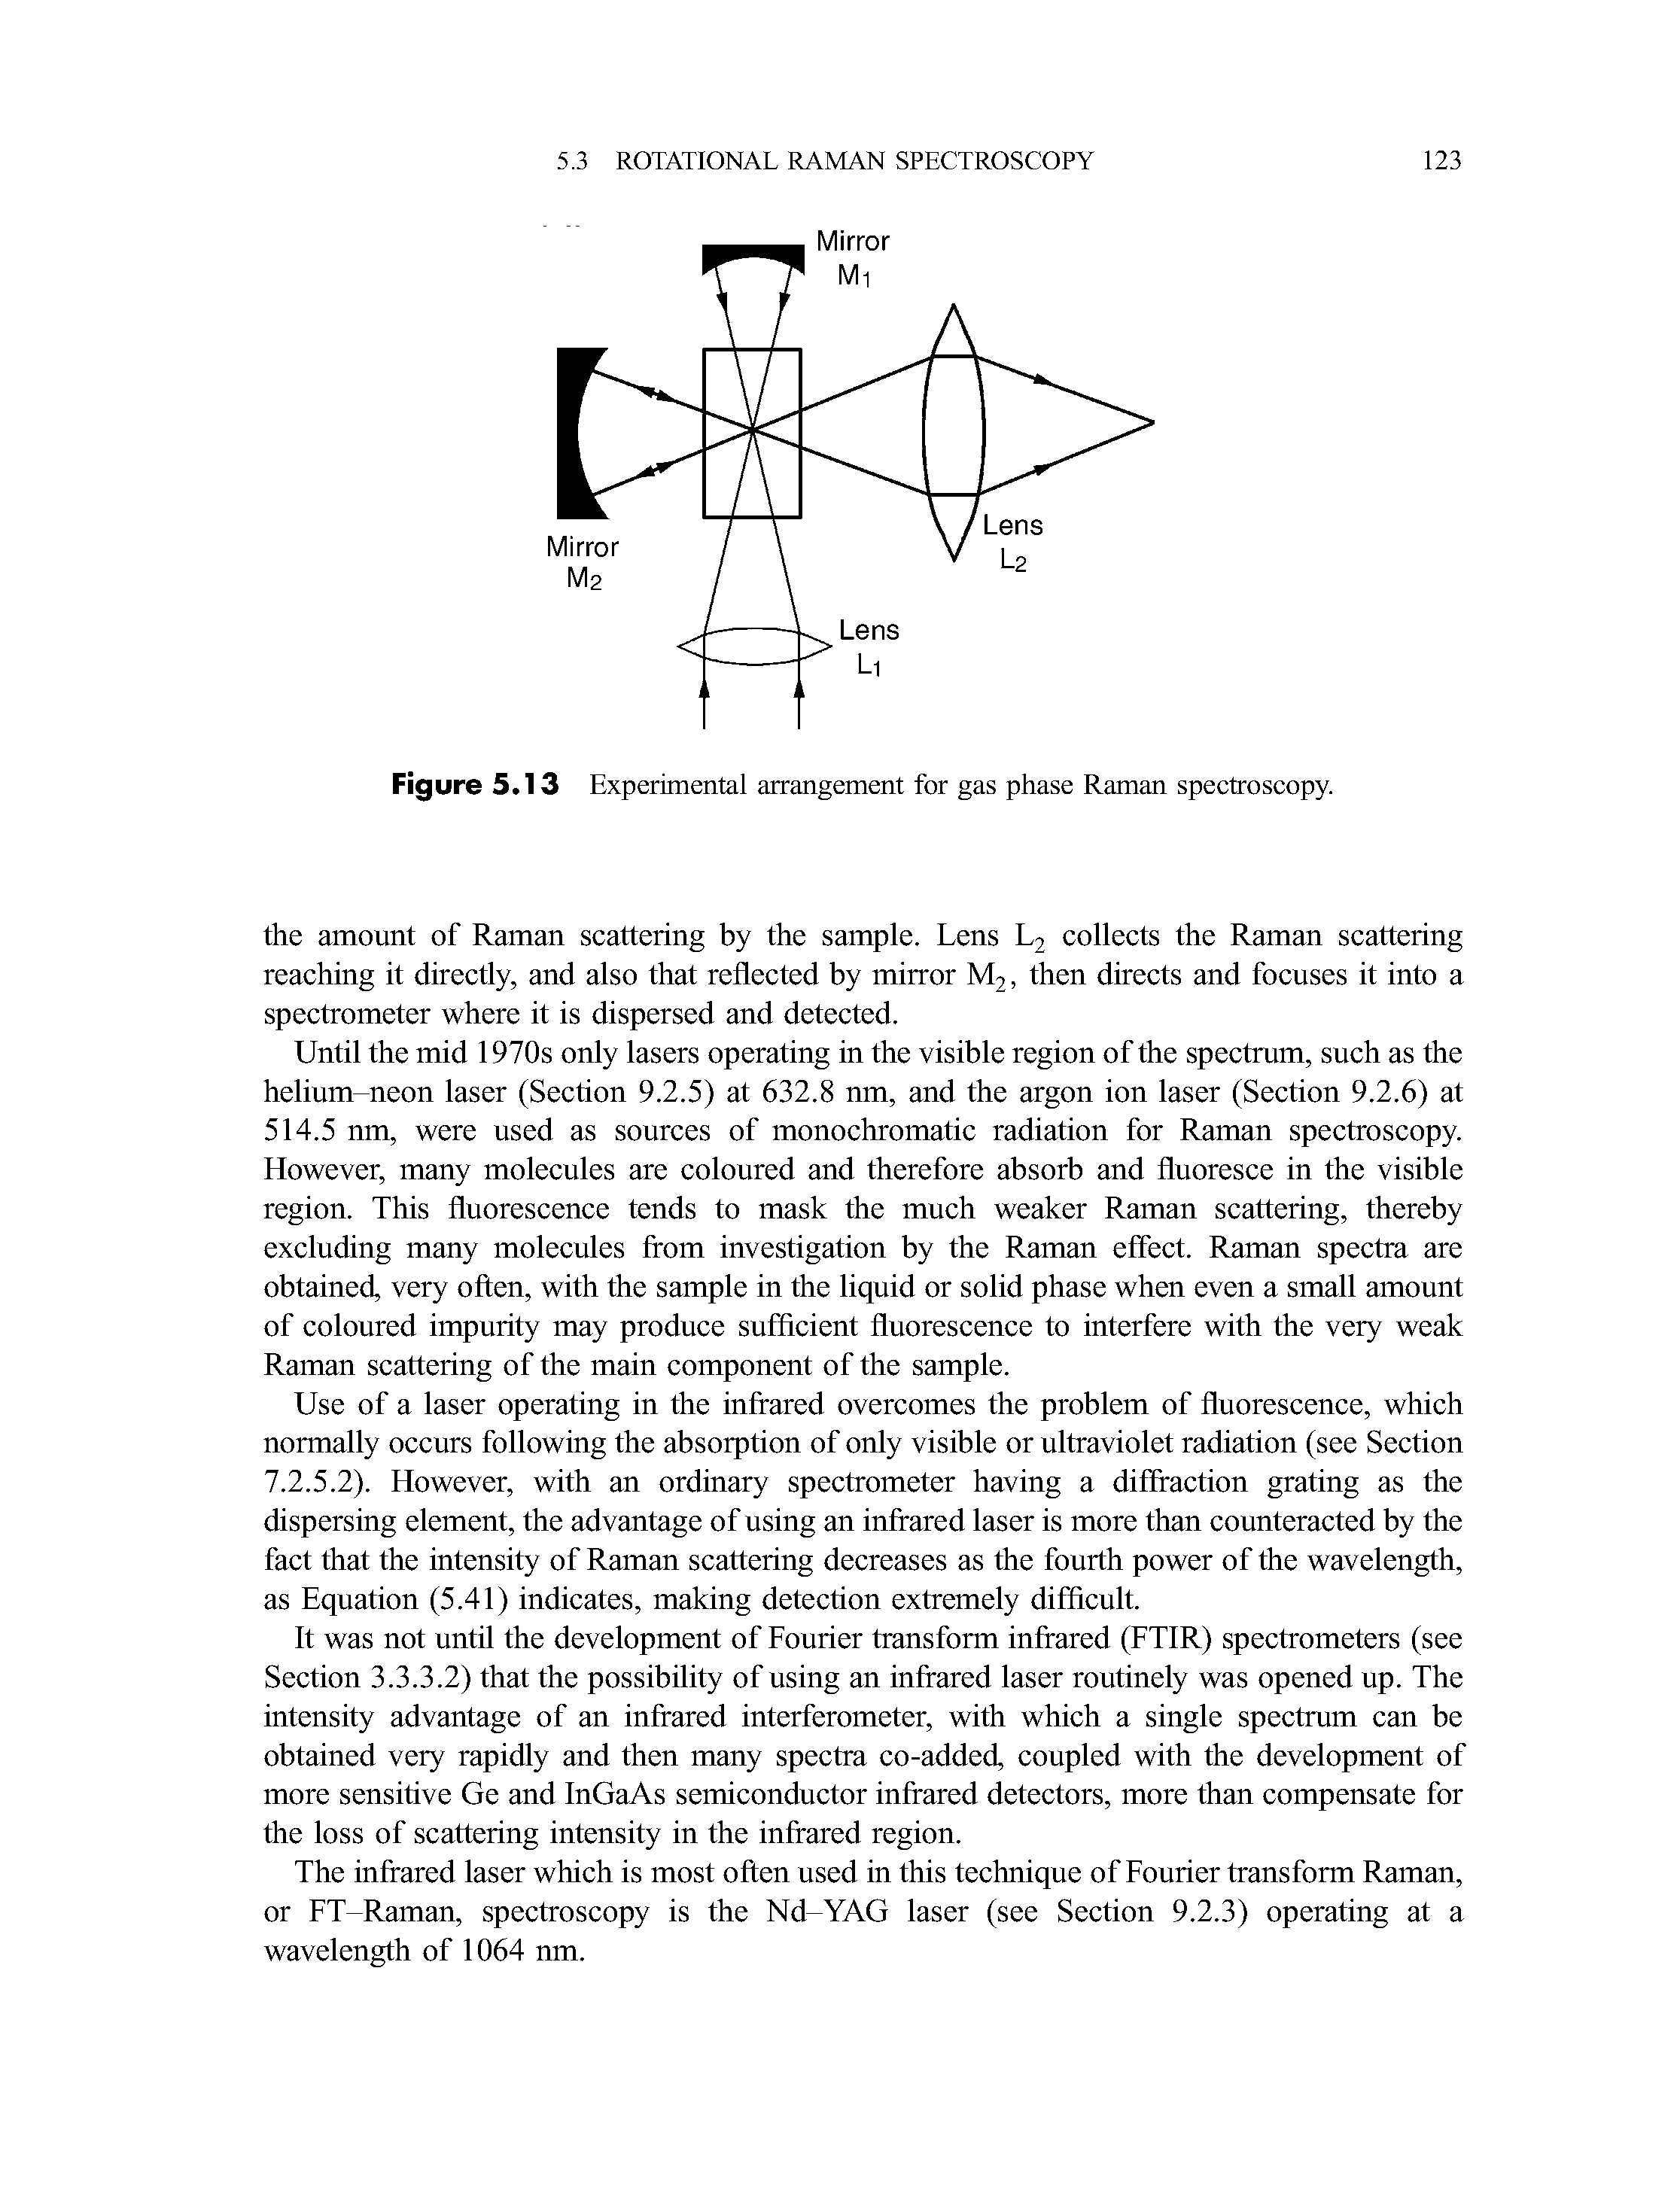 Figure 5.13 Experimental arrangement for gas phase Raman spectroscopy.